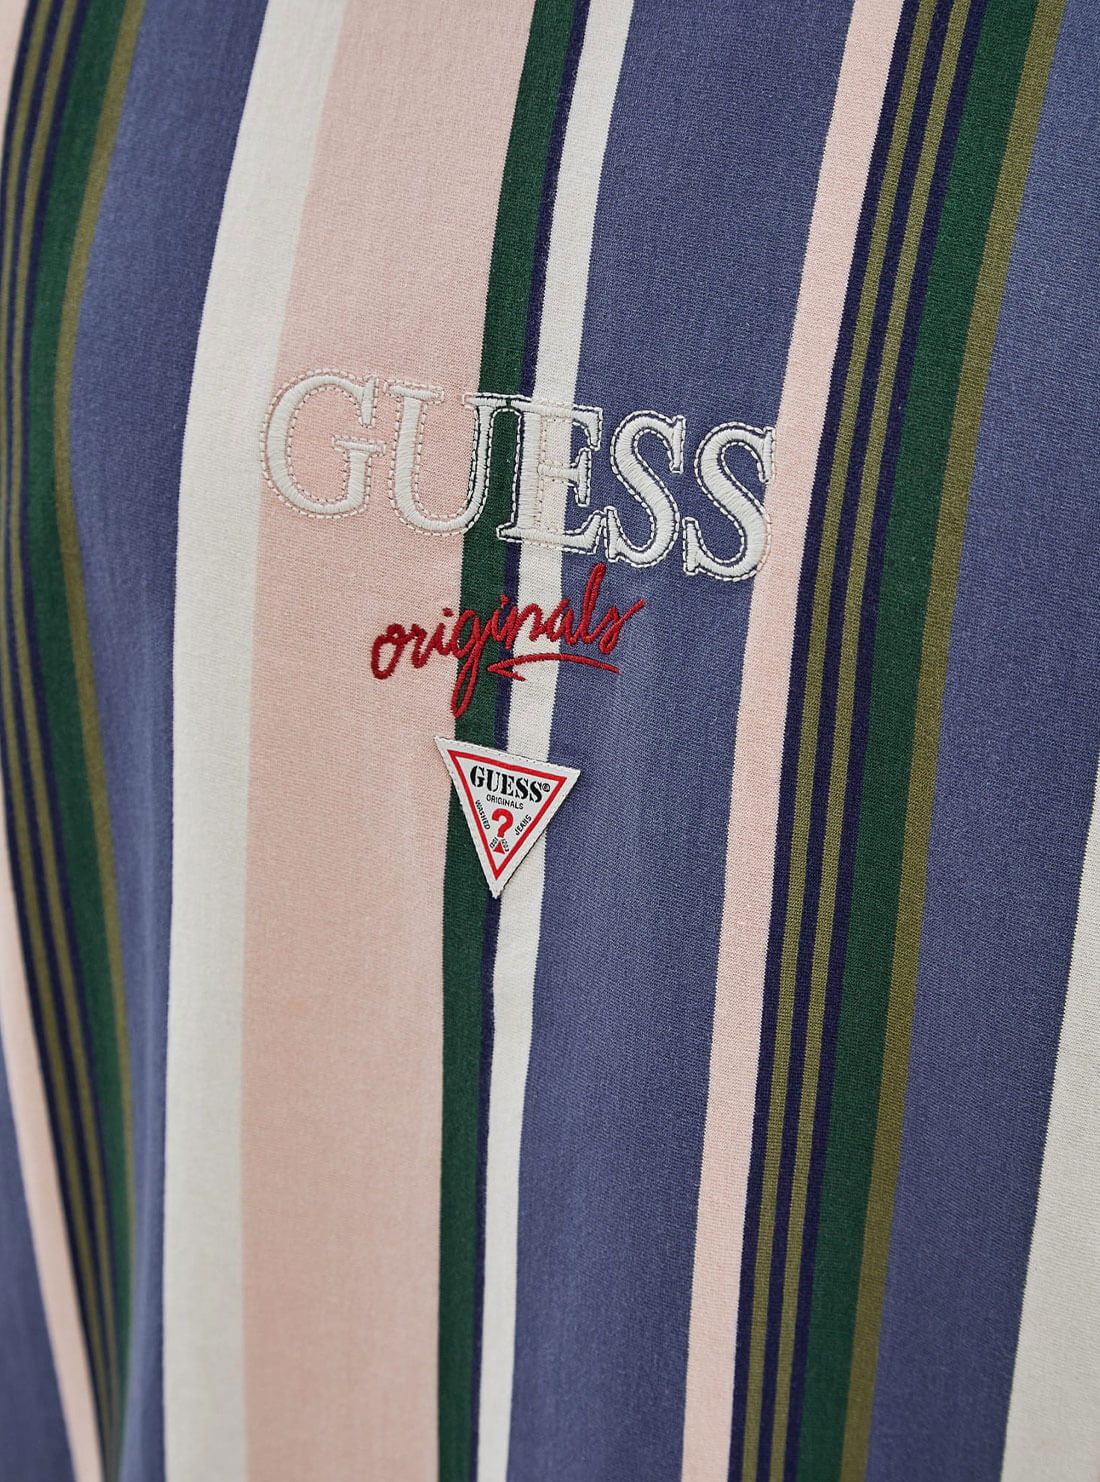 Guess Originals Blue Multi Stripe Logo T-Shirt | GUESS Men's Originals | detail view